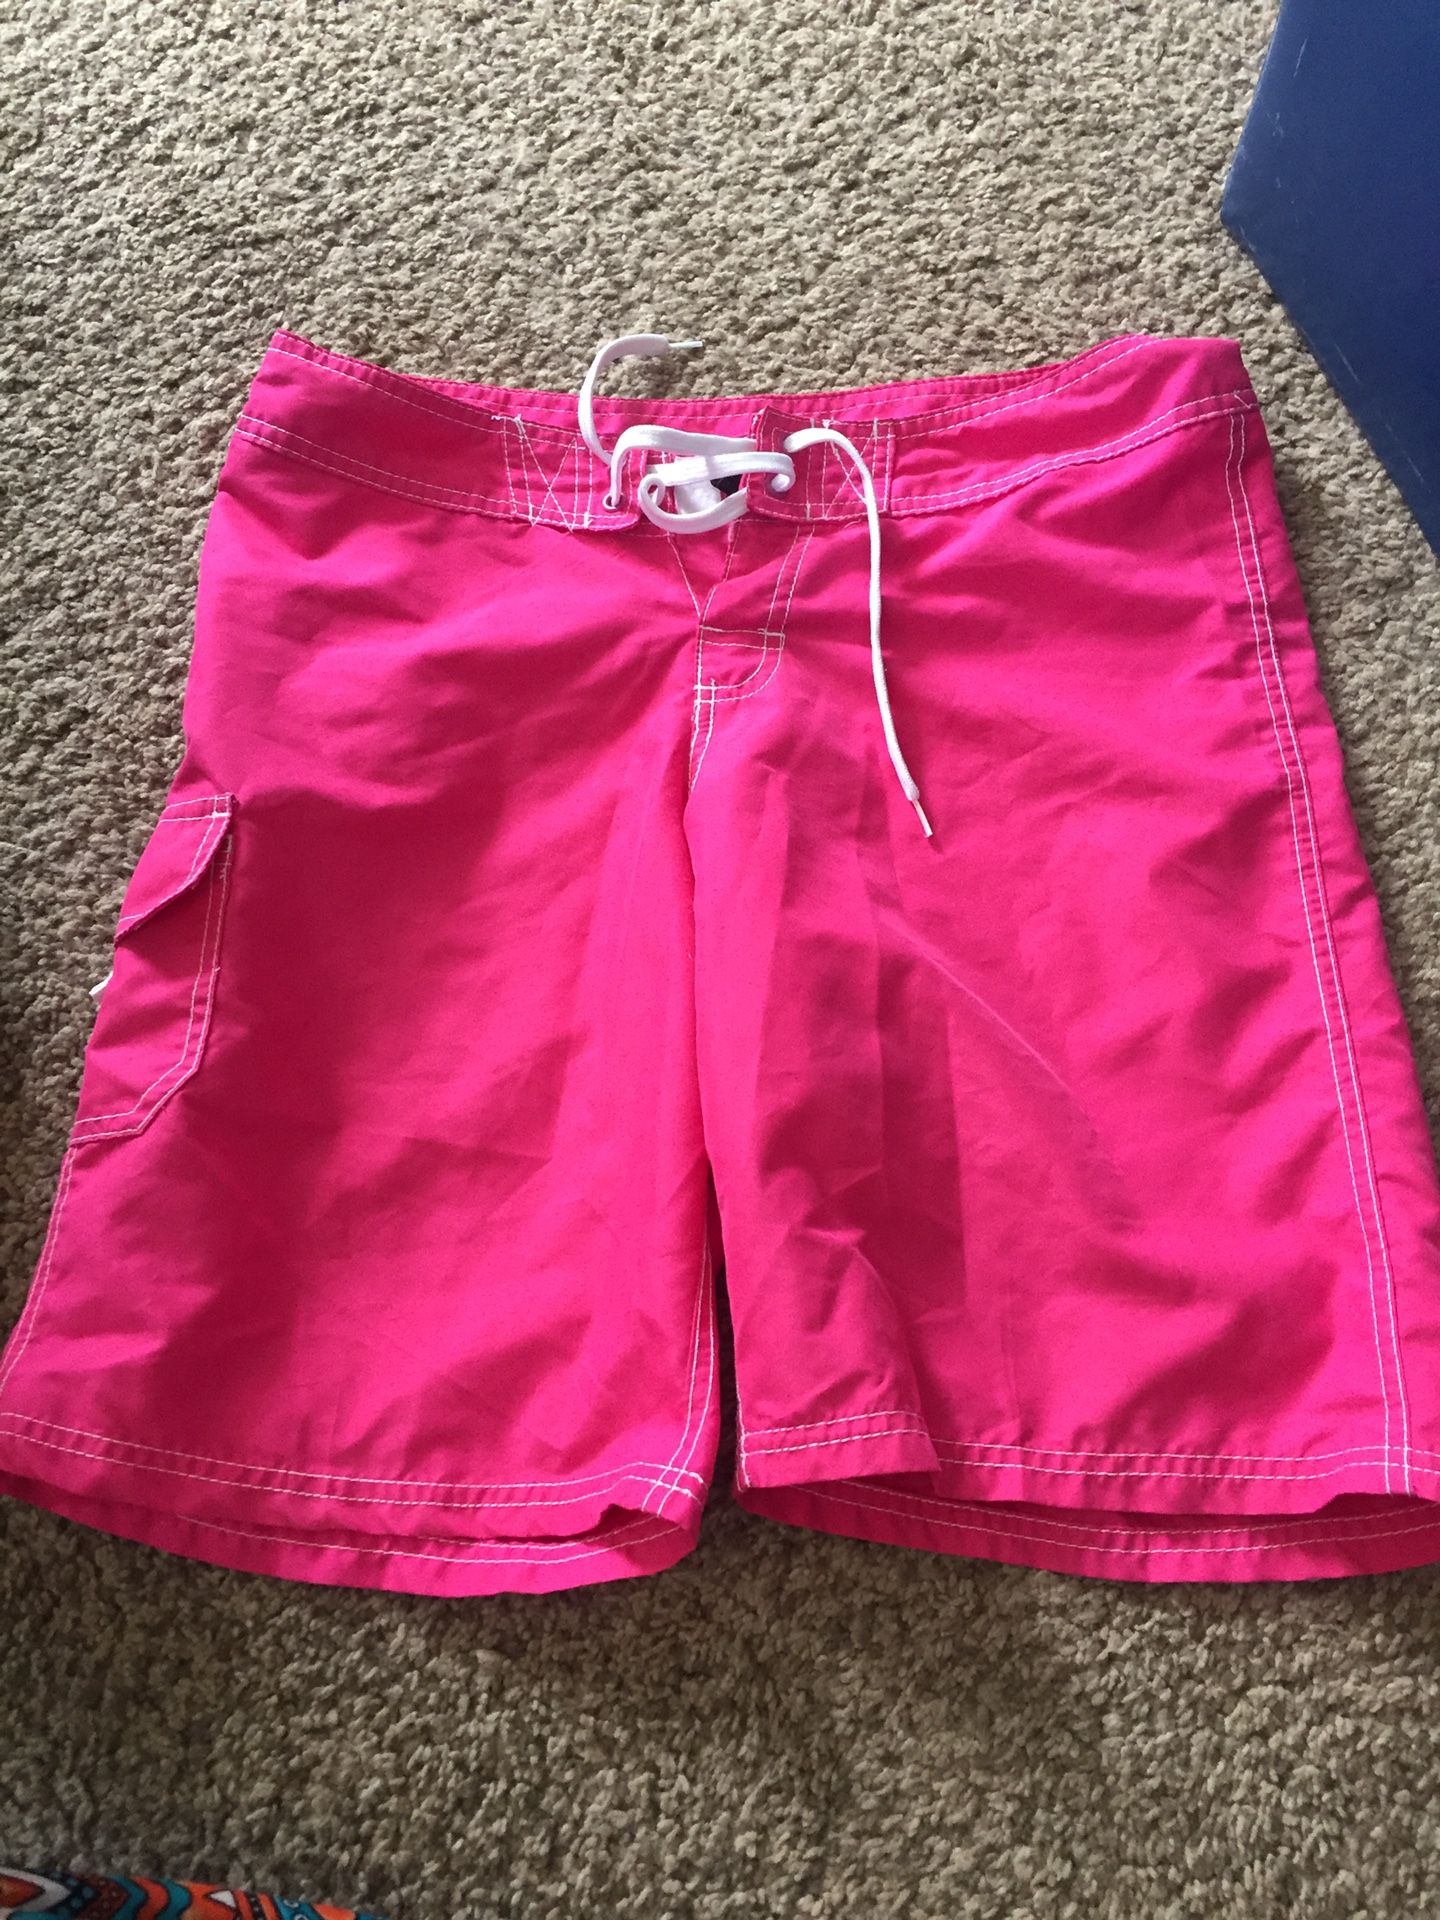 Hot Pink Board Shorts Size 6